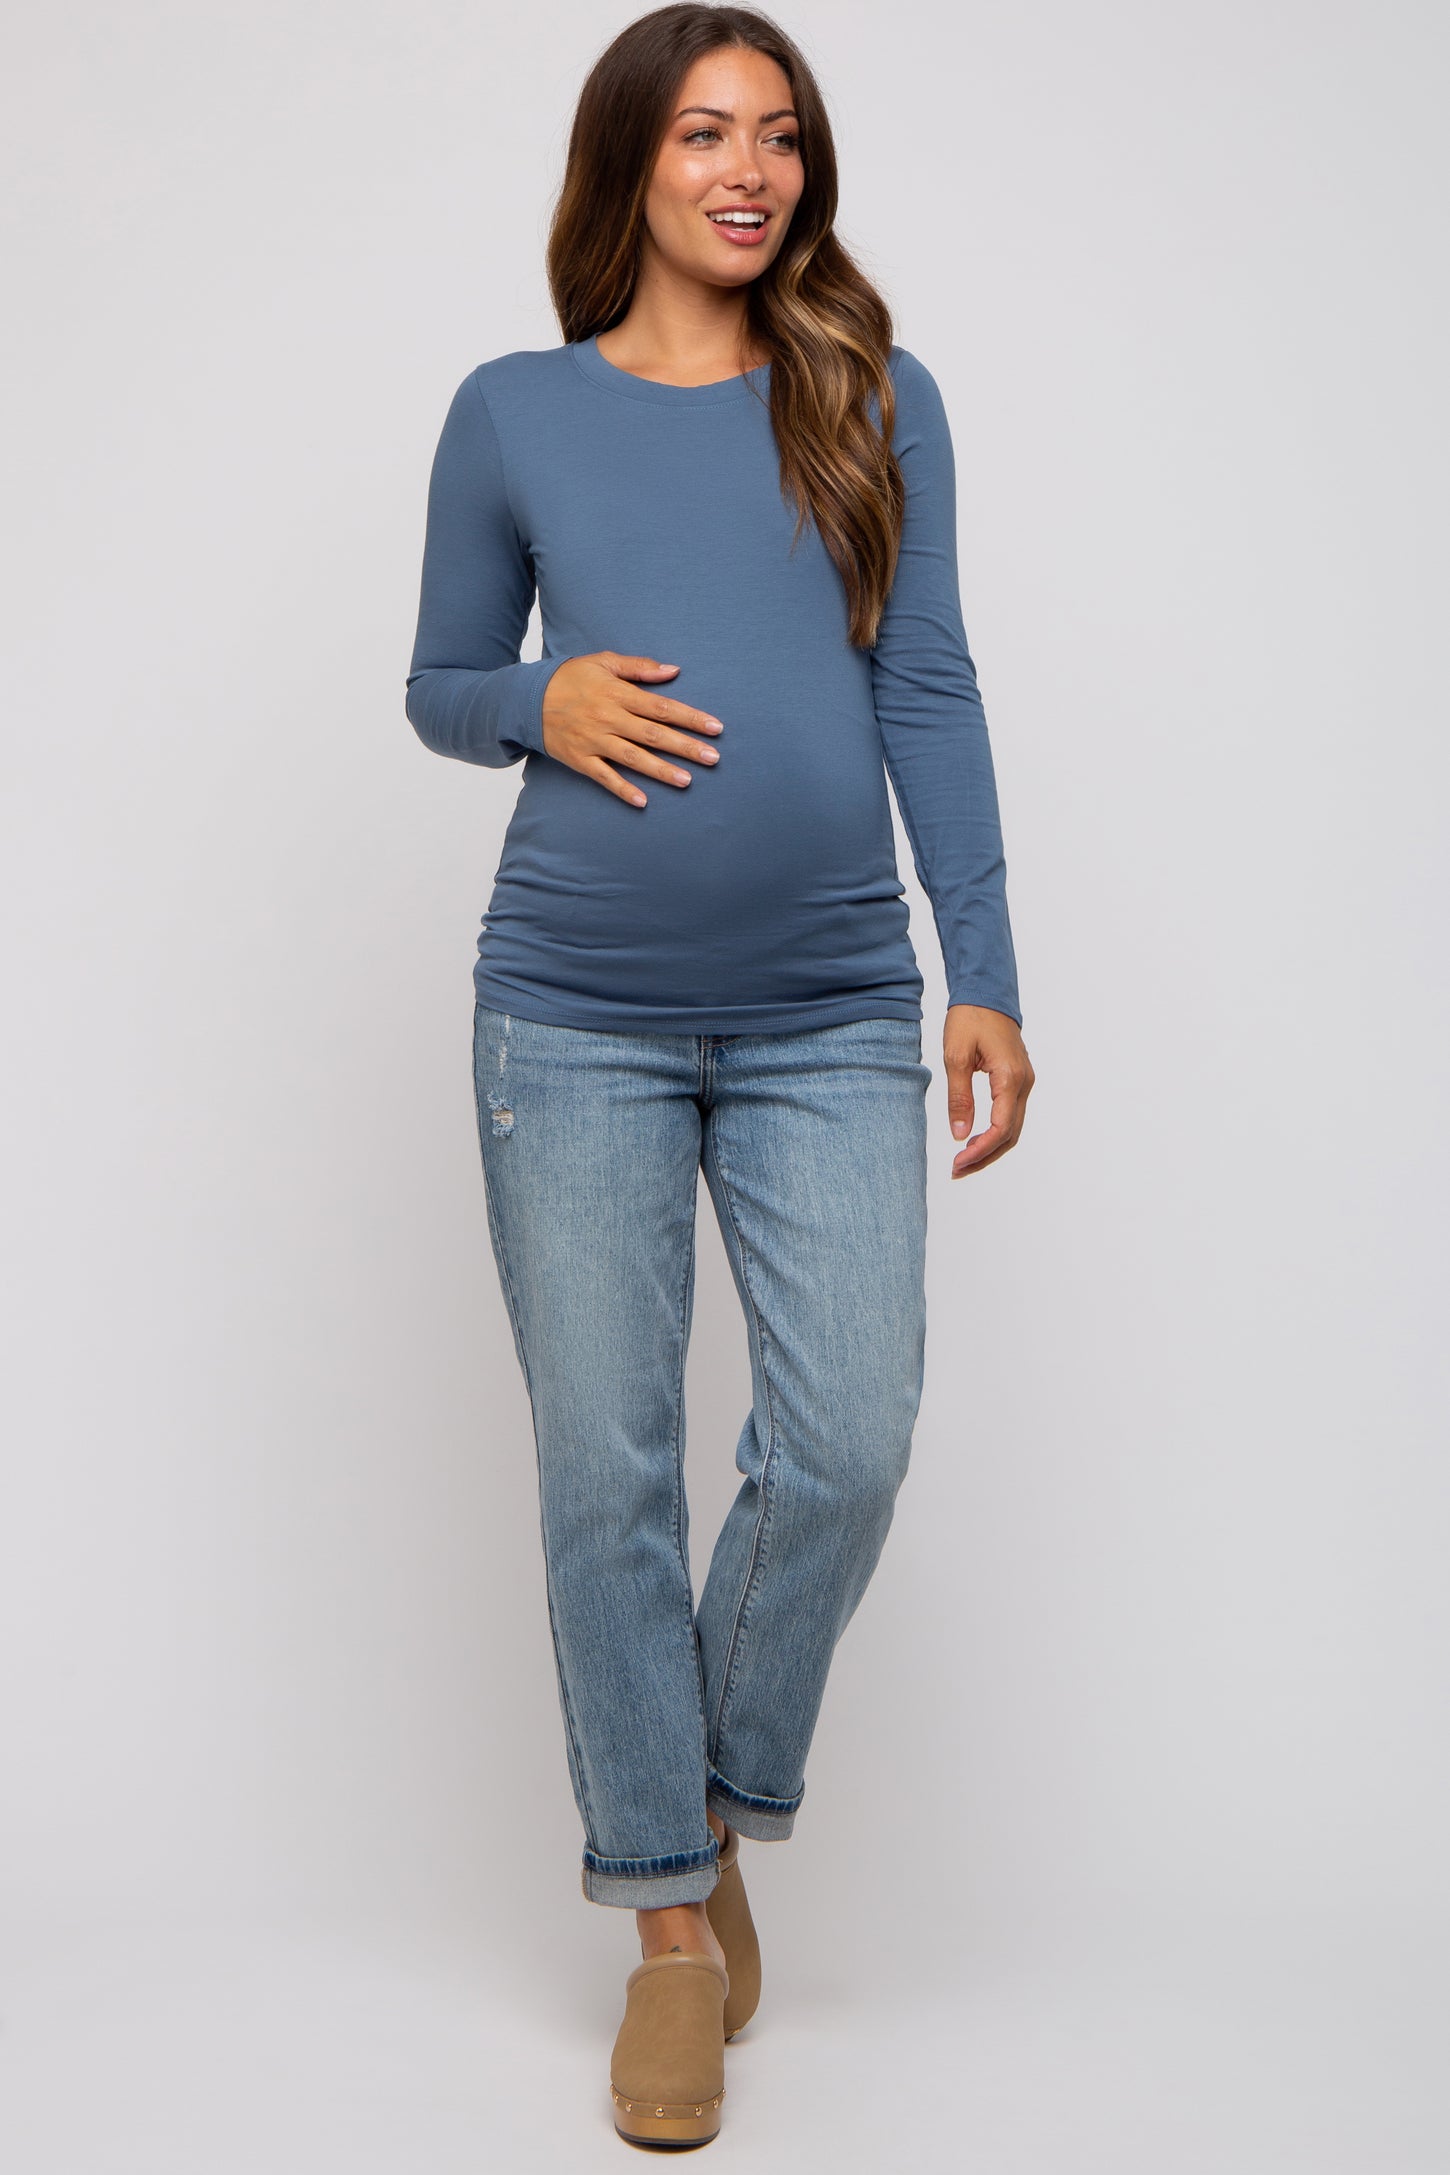 Blue Long Sleeve Maternity Top